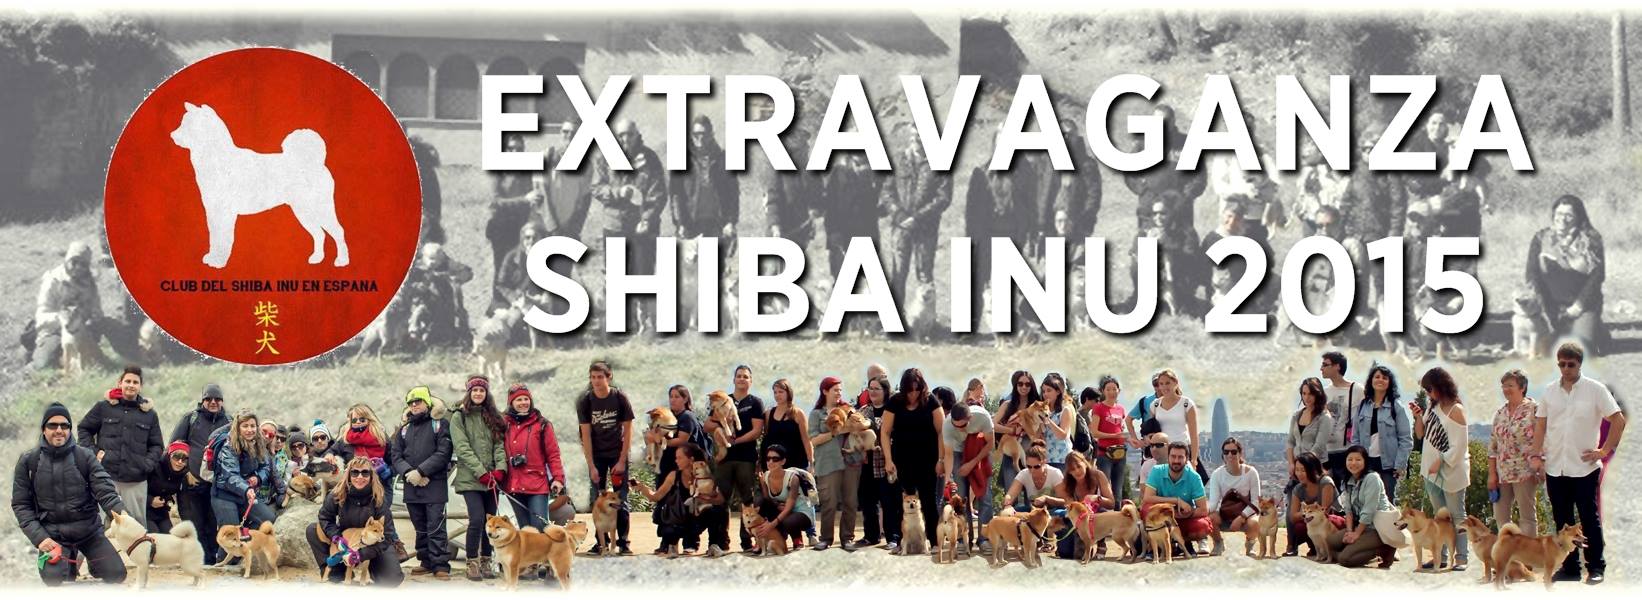 18/10/15 – Extravaganza Shiba Inu 2105